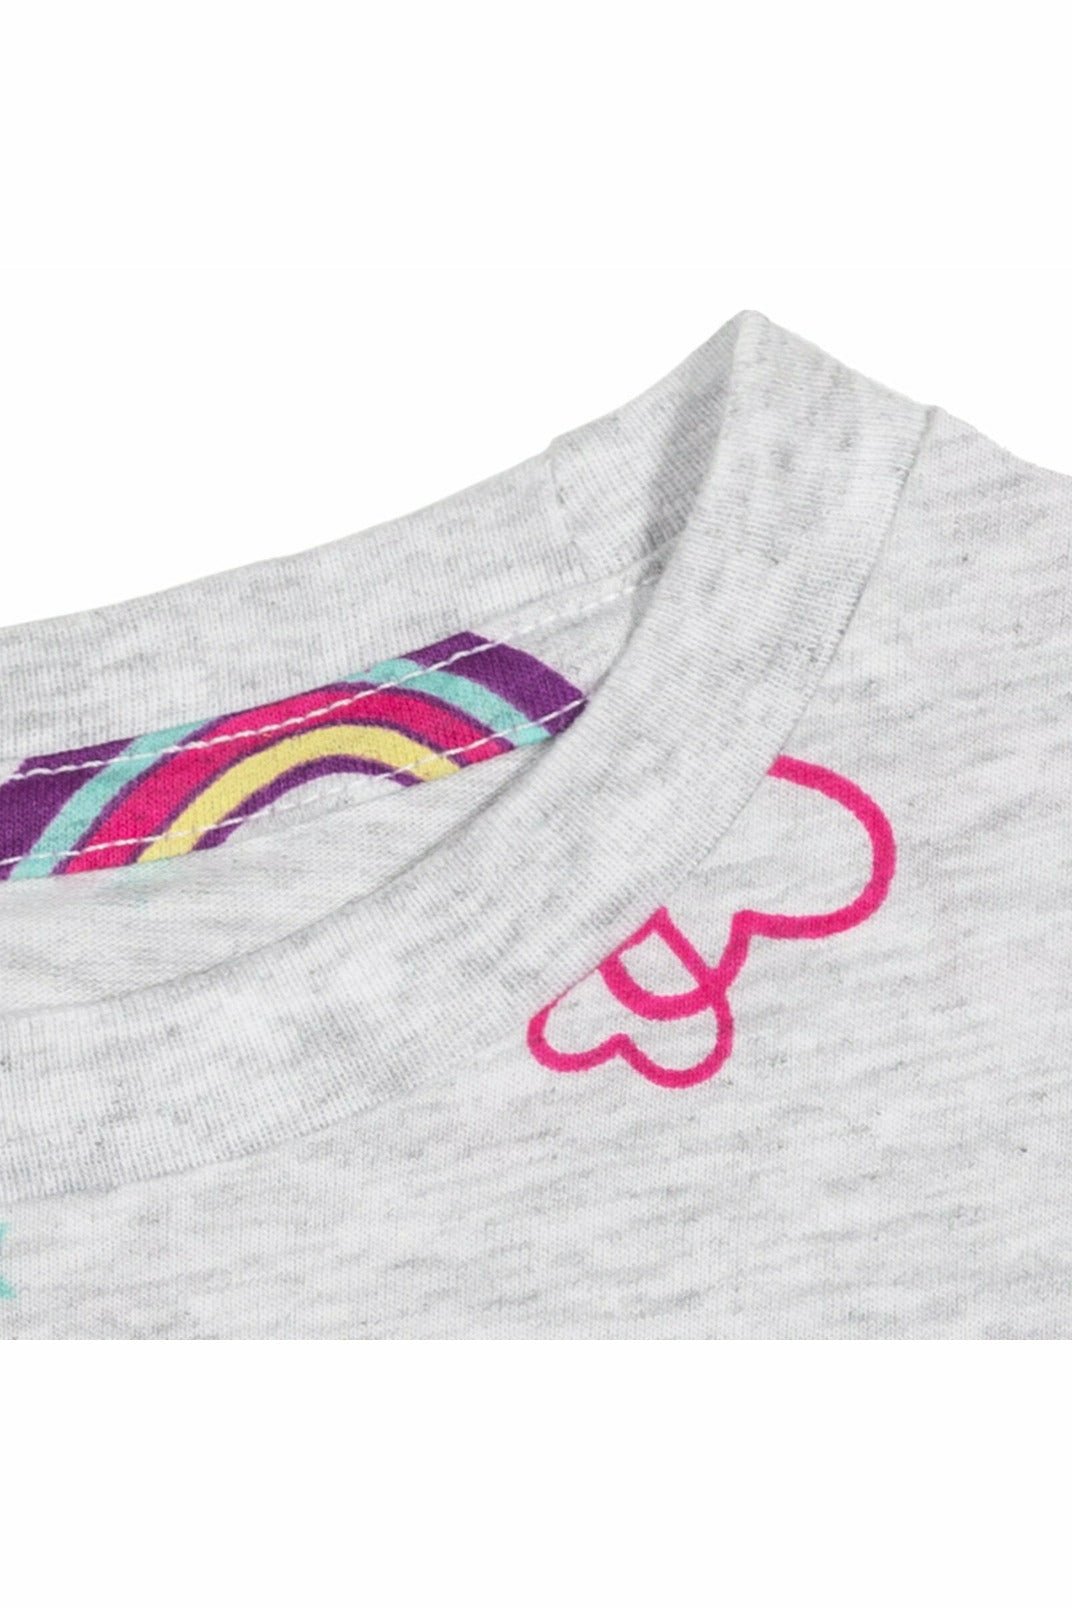 Jojo Siwa 2 Pack Graphic T-Shirt - imagikids